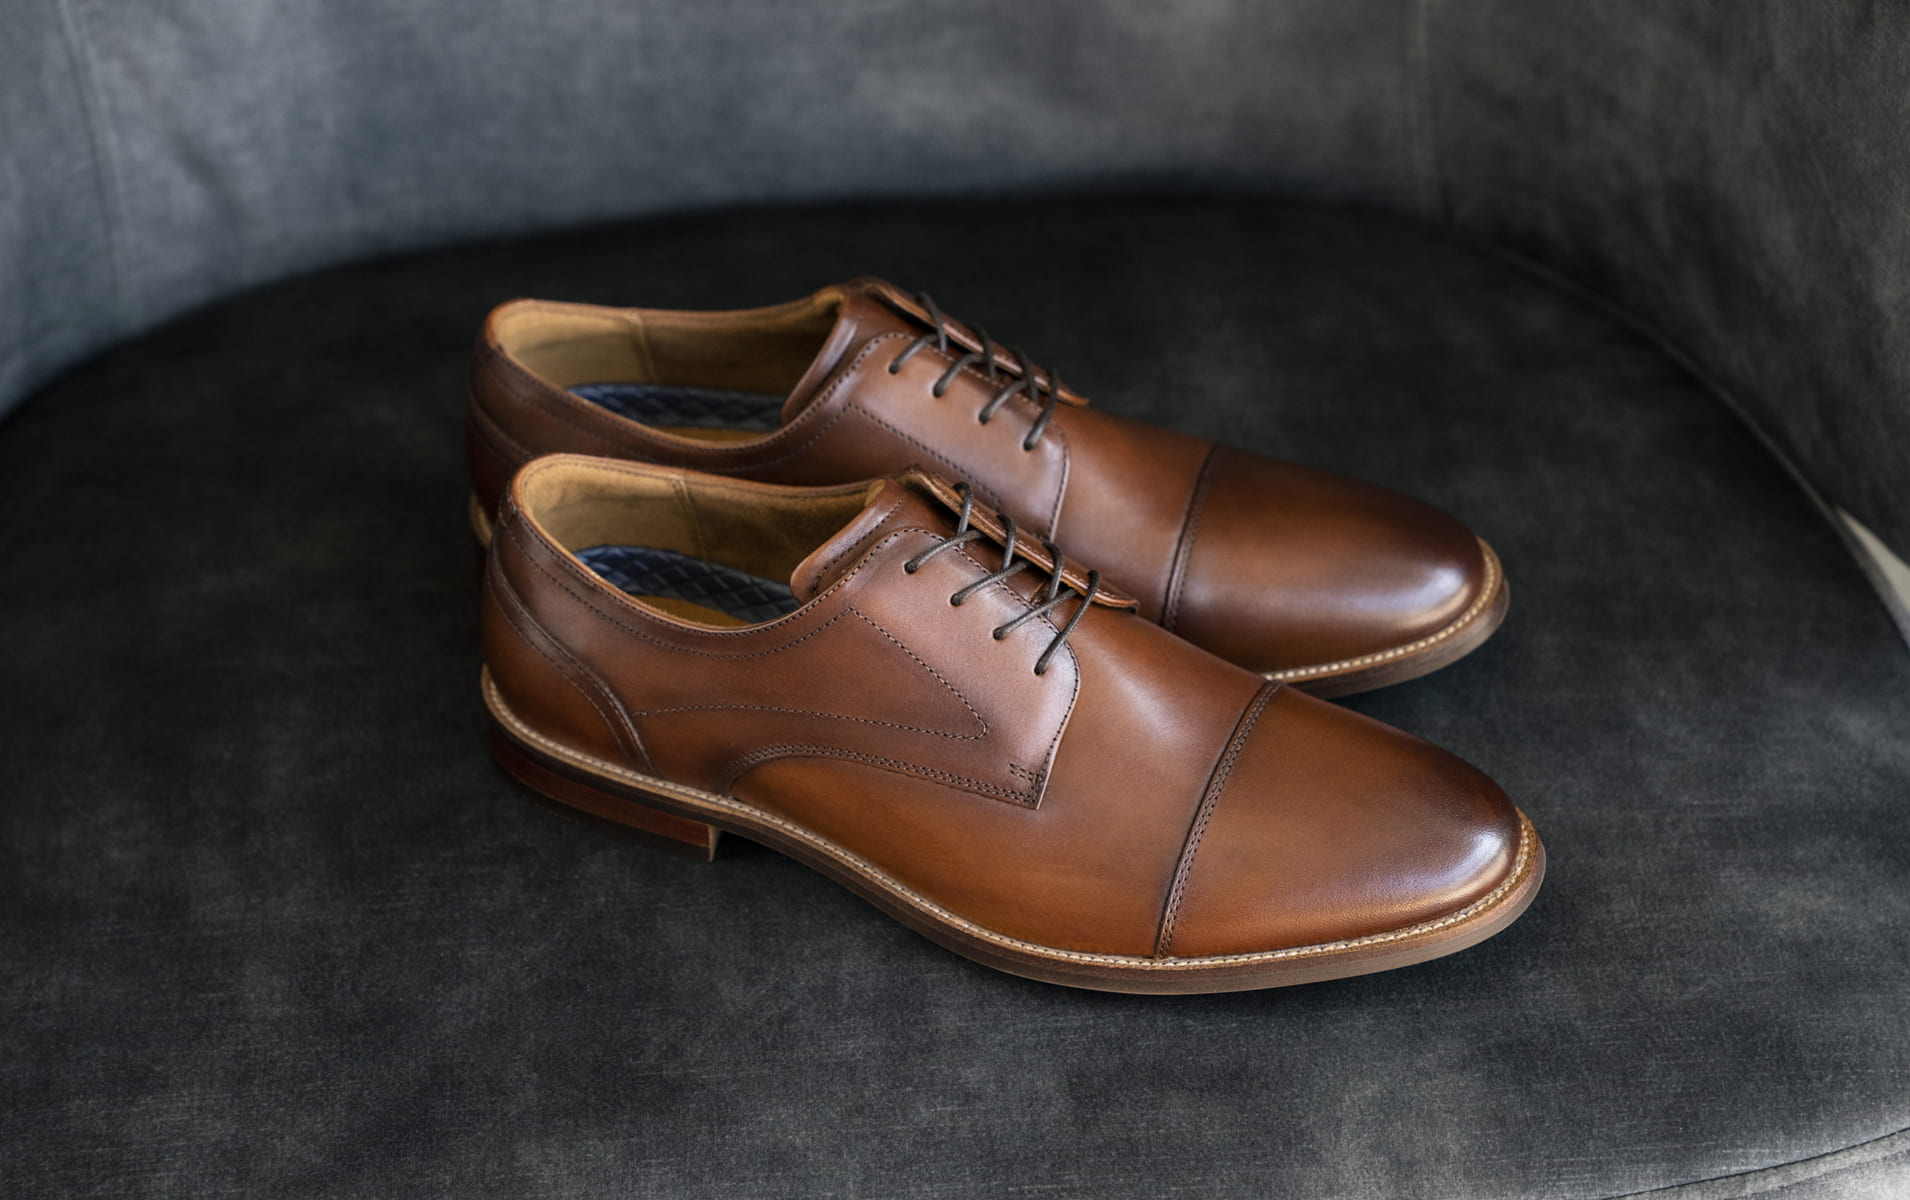 Click to shop Florsheim dress shoes. Image features the Rucci in cognac.